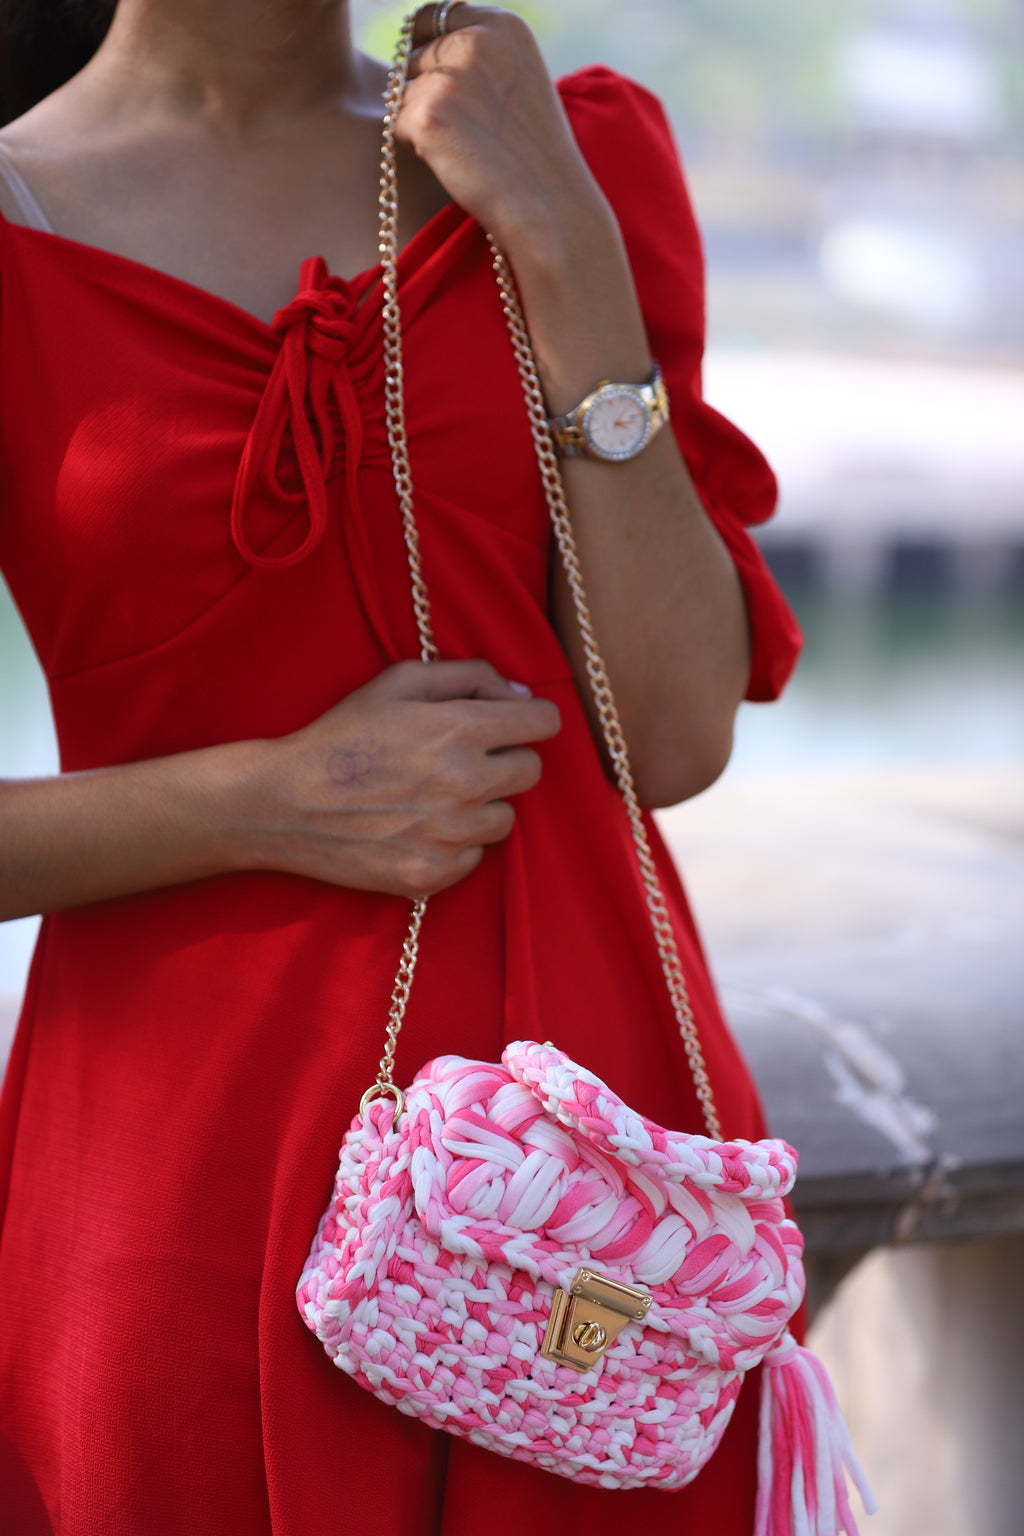 Handmade Pink and White Crochet Bag